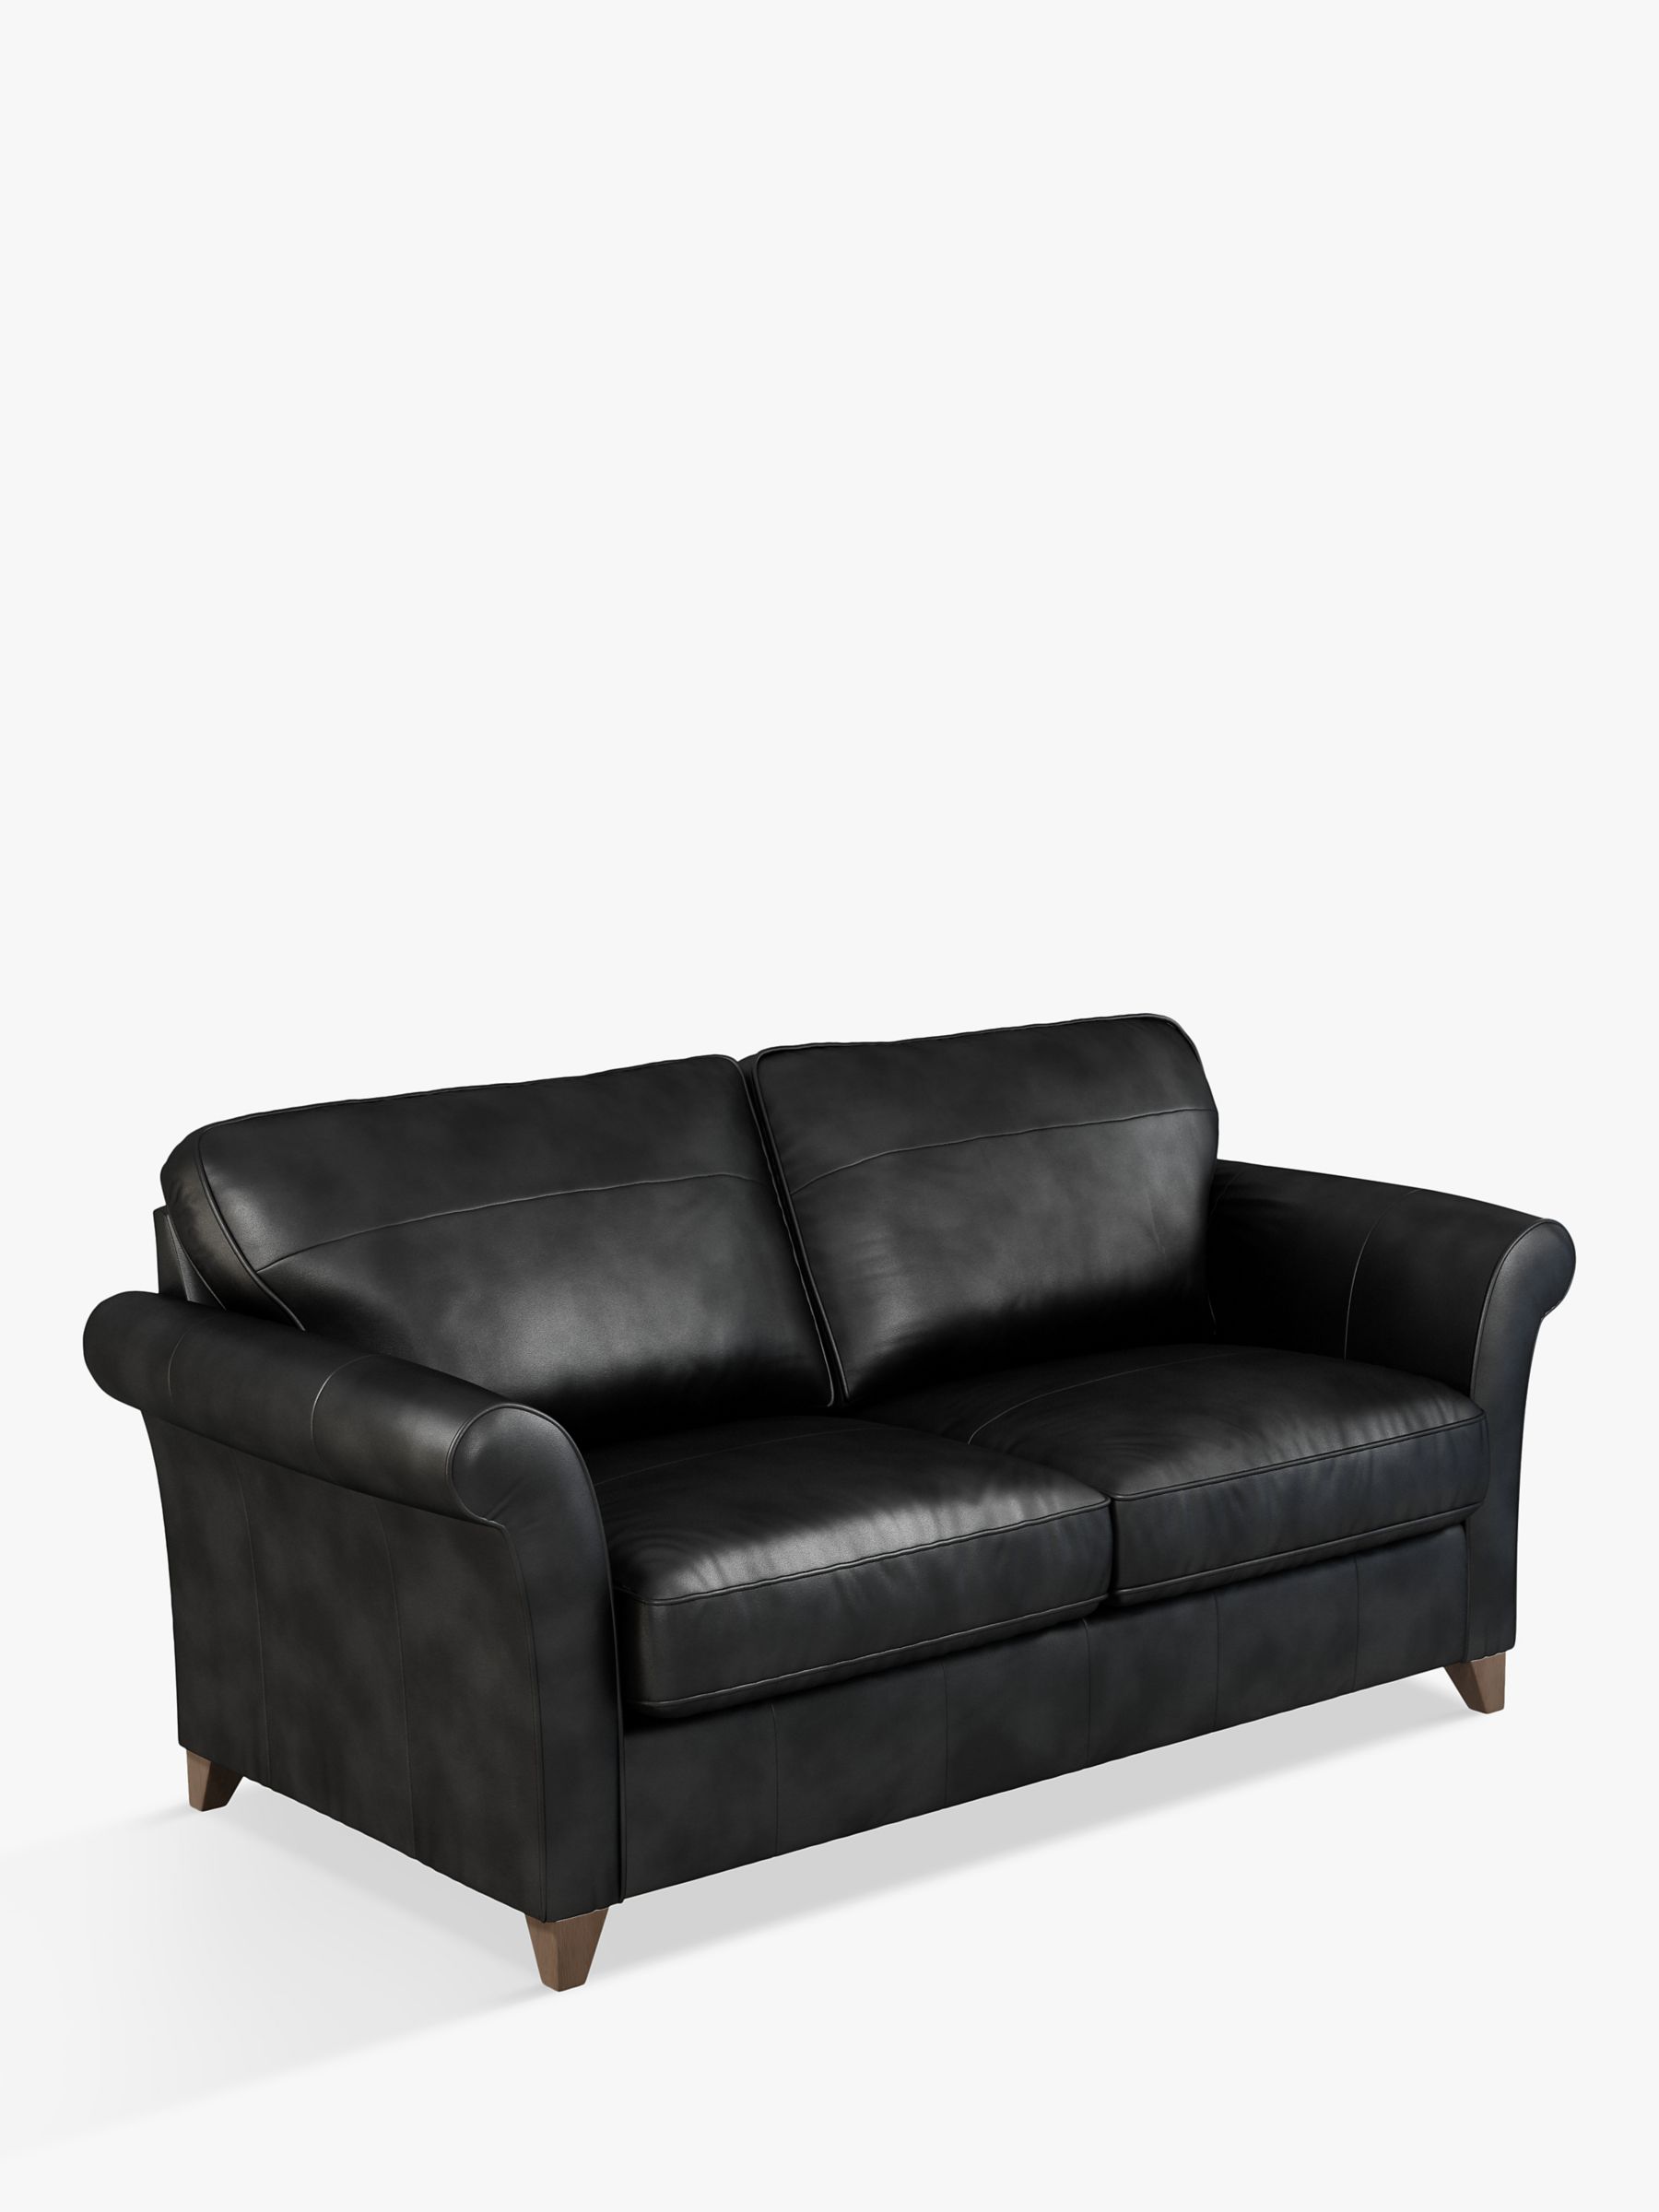 Charlotte Range, John Lewis Charlotte Grand 4 Seater Leather Sofa, Dark Leg, Contempo Black